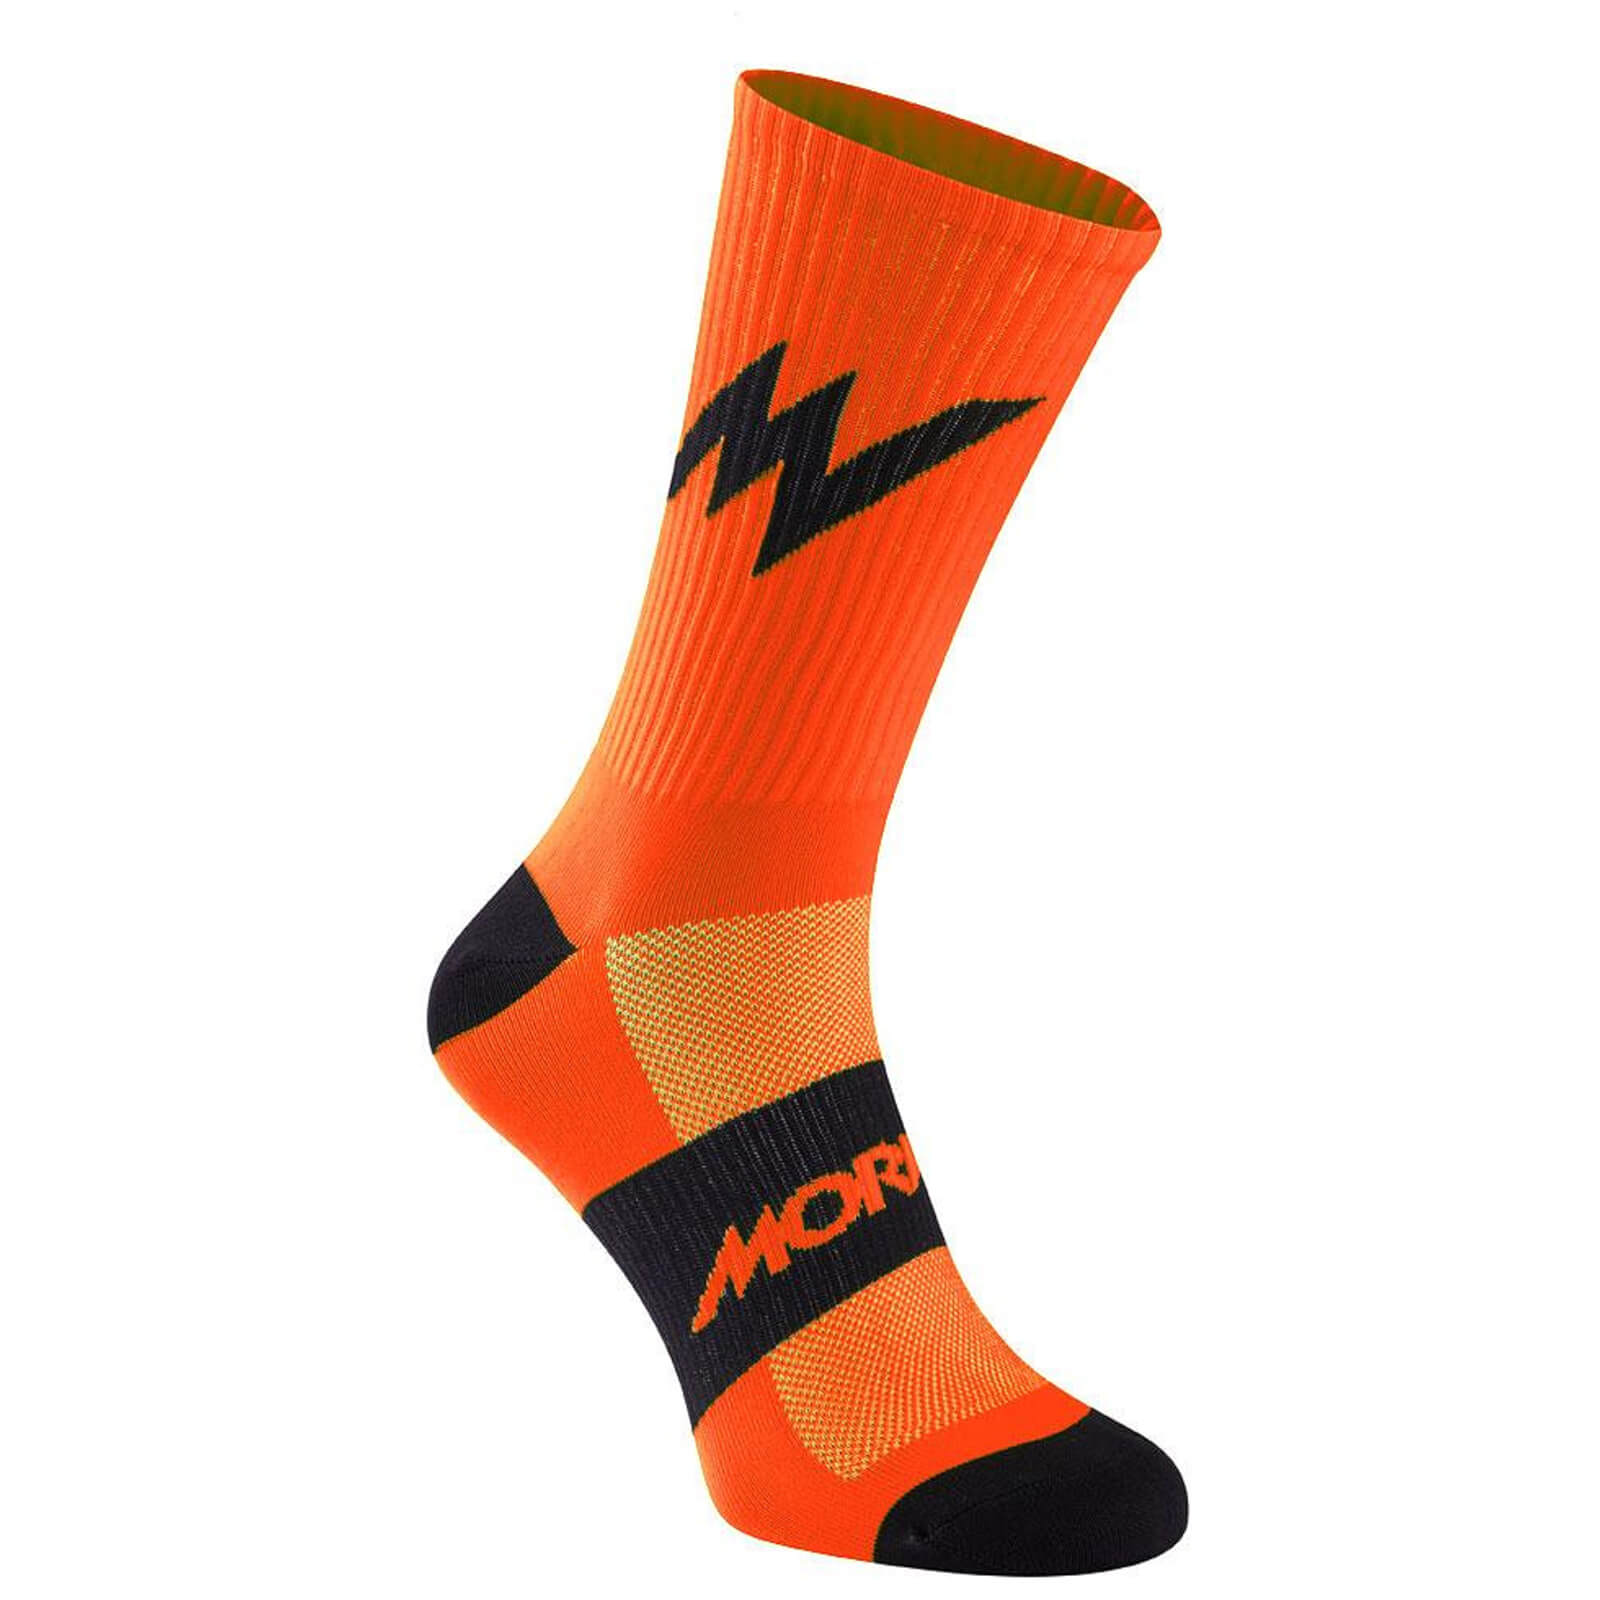 Morvelo Series Emblem Orange Socks - S/M